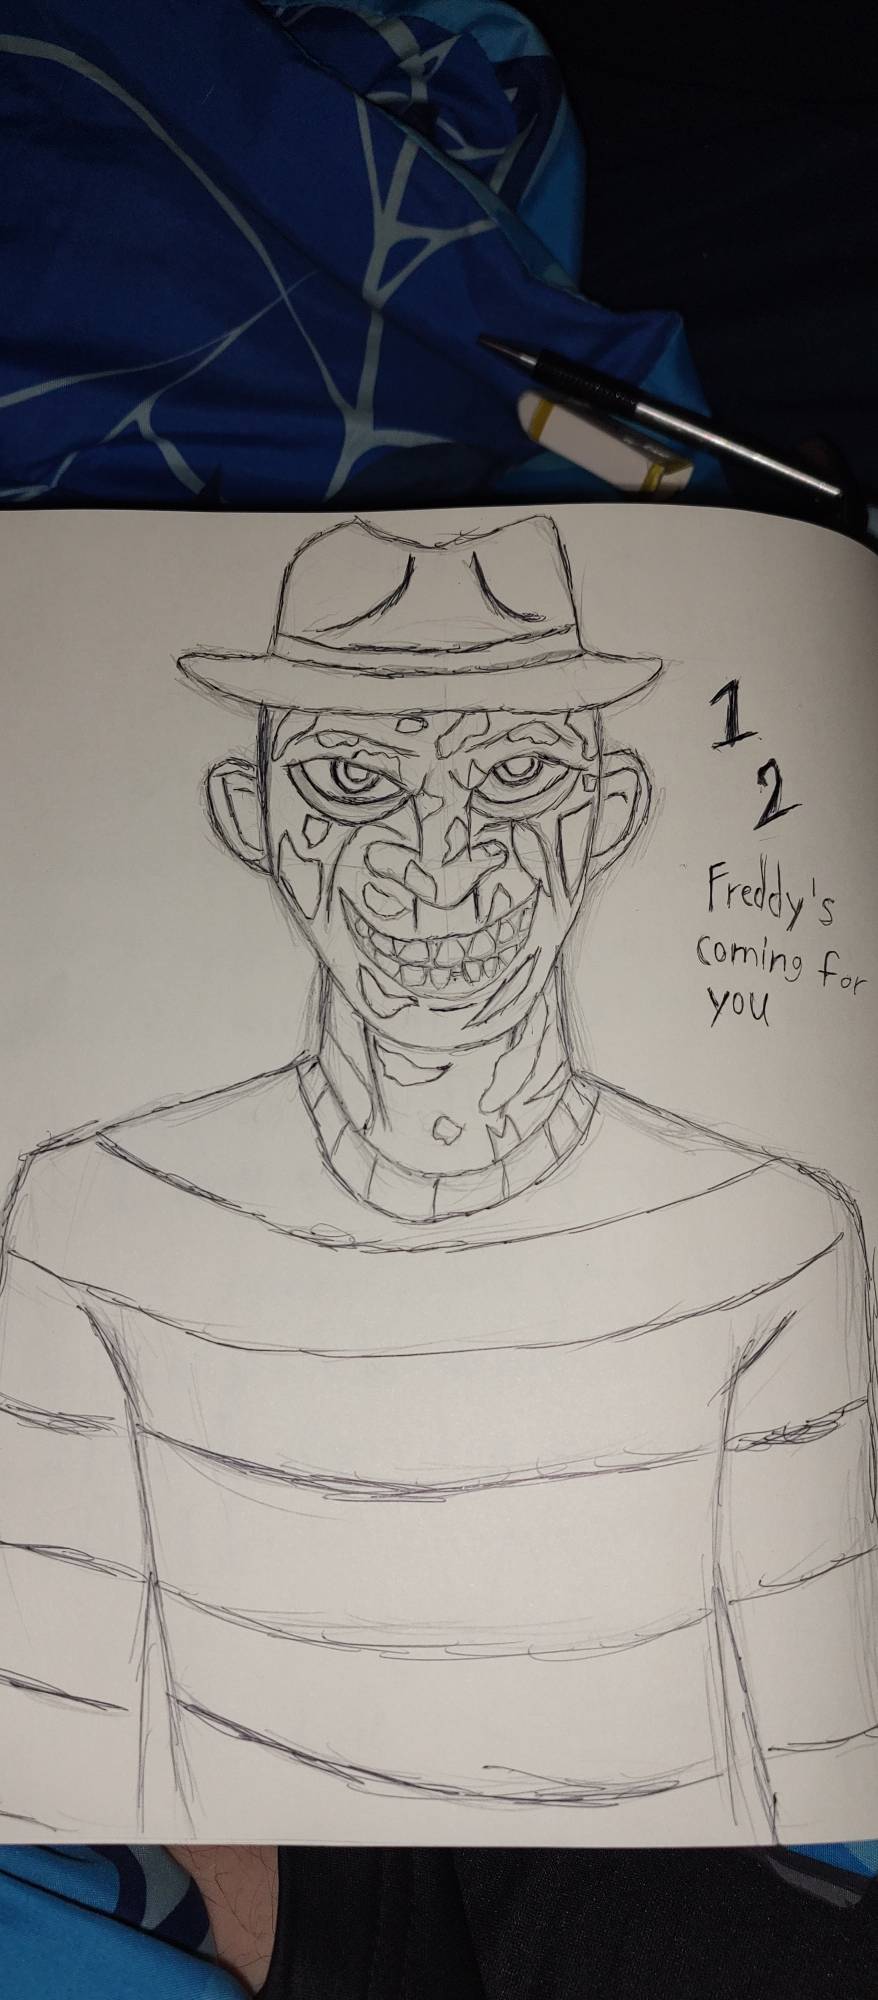 My drawing of Freddy by EvyOriginal on DeviantArt